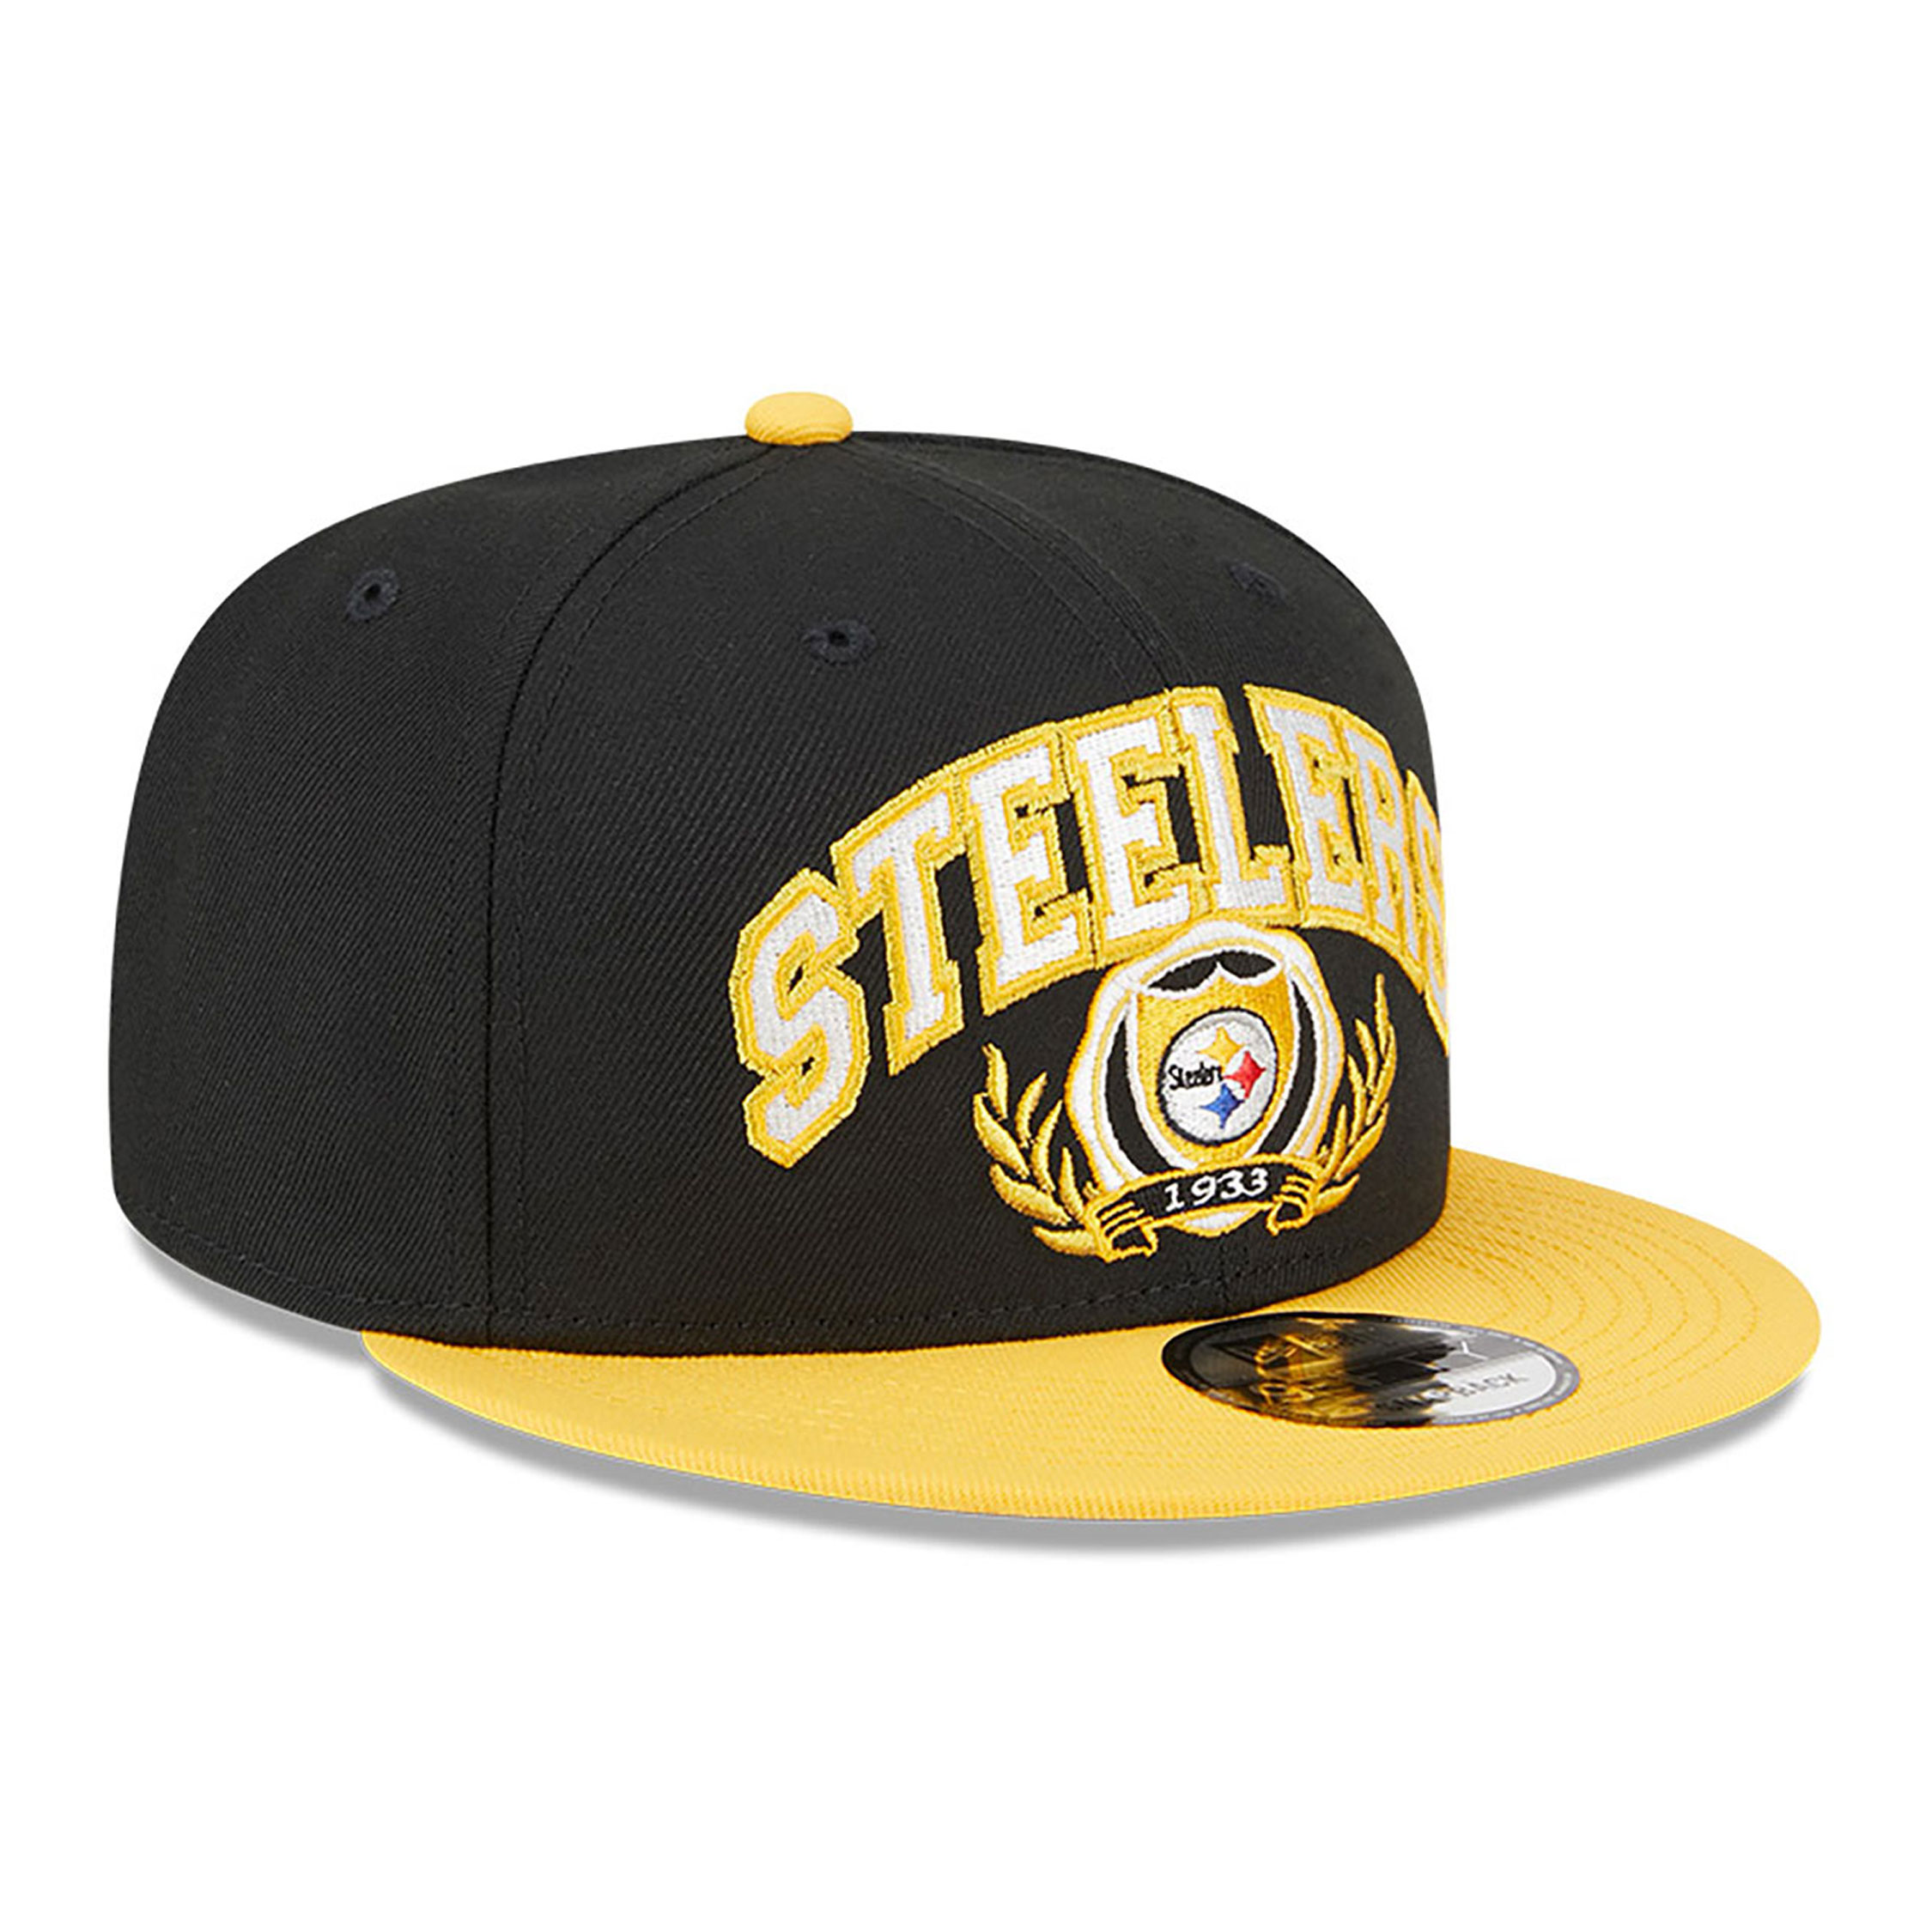 Pittsburgh Steelers NFL Team Black 9FIFTY Snapback Cap